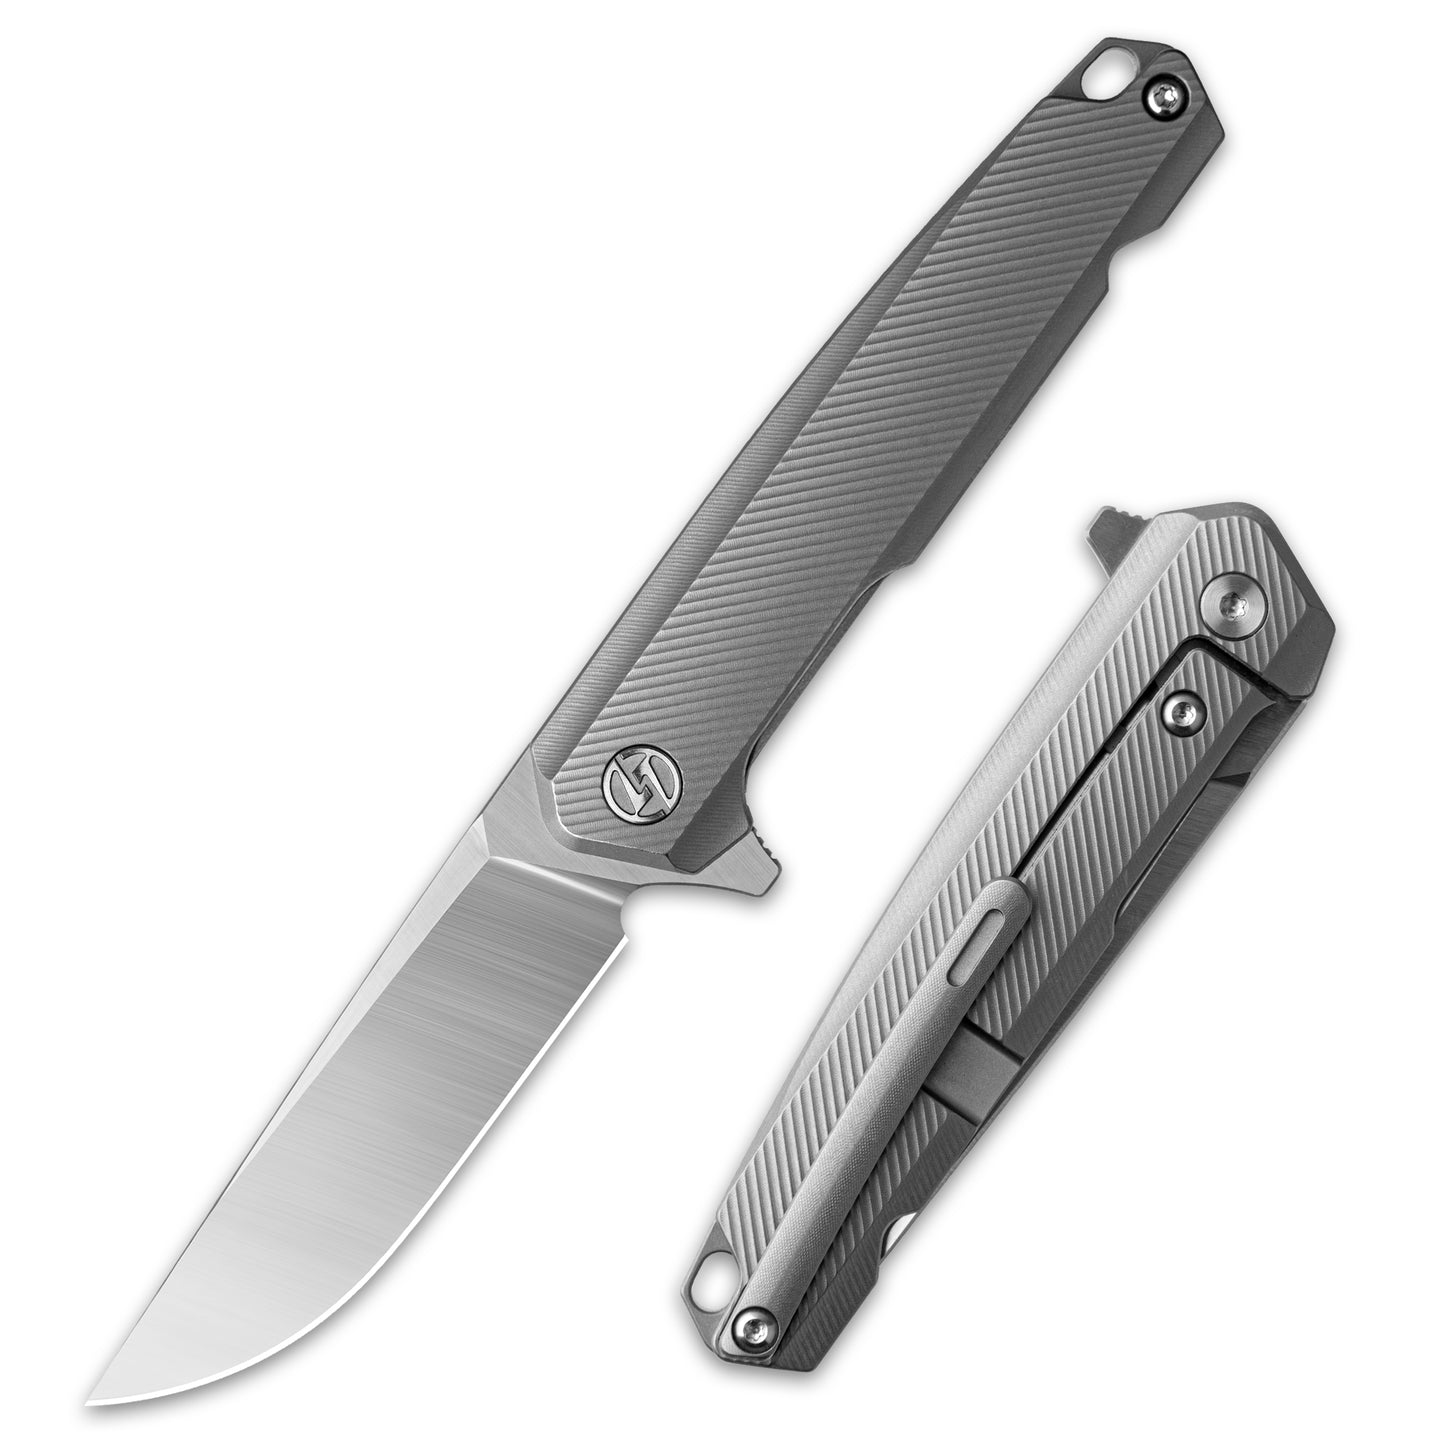 OLITANS T041 Pocket Knife, 2.6'' M390 Steel Blade Titanium handle, Small EDC Knife with Pocket Clip for Men Women, 1.8 oz